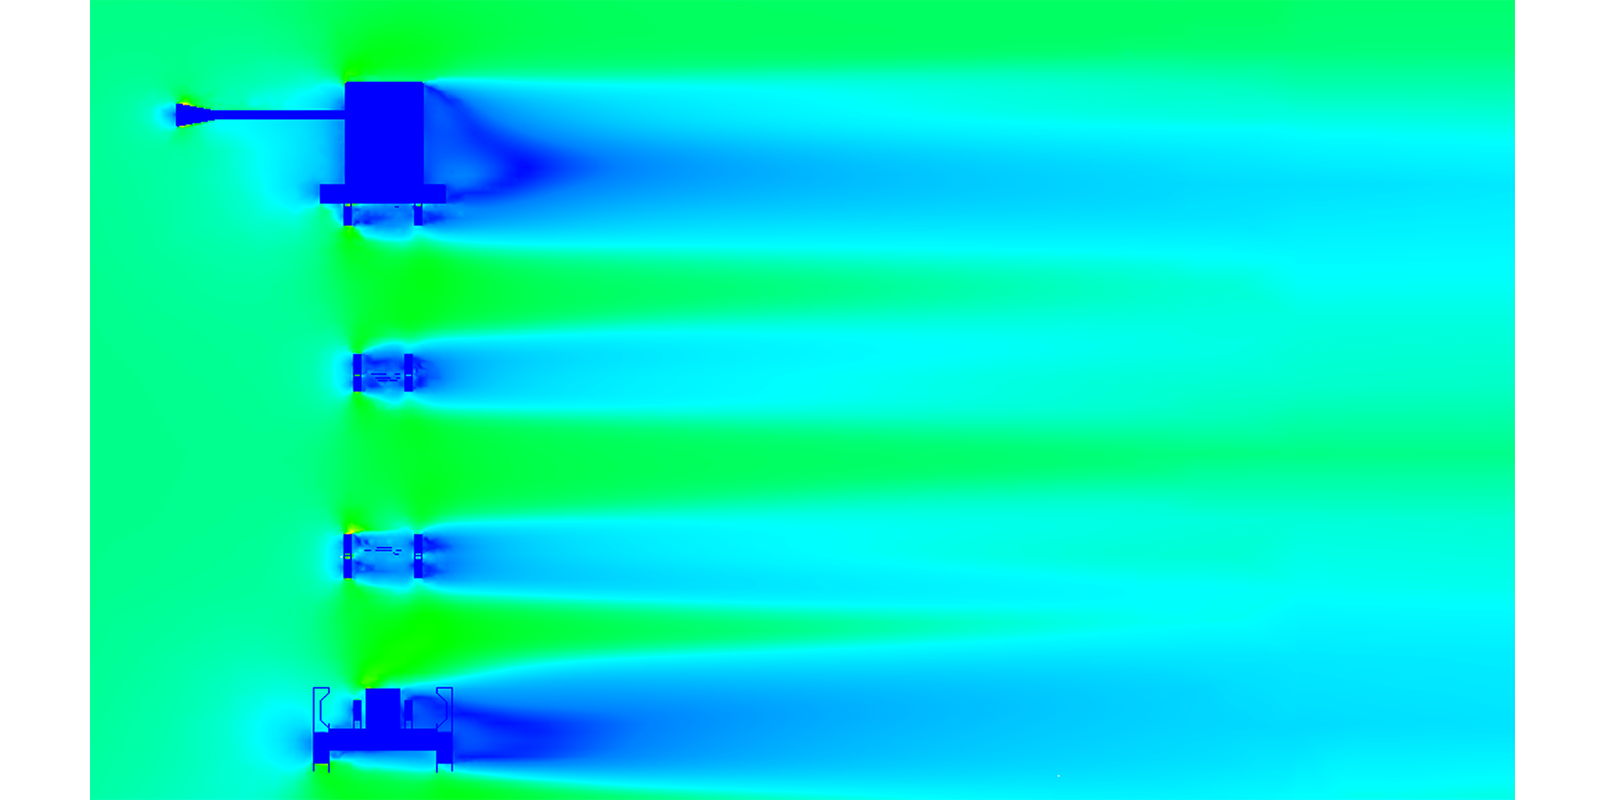 CFD wind velocity contour plot over scissor-lift